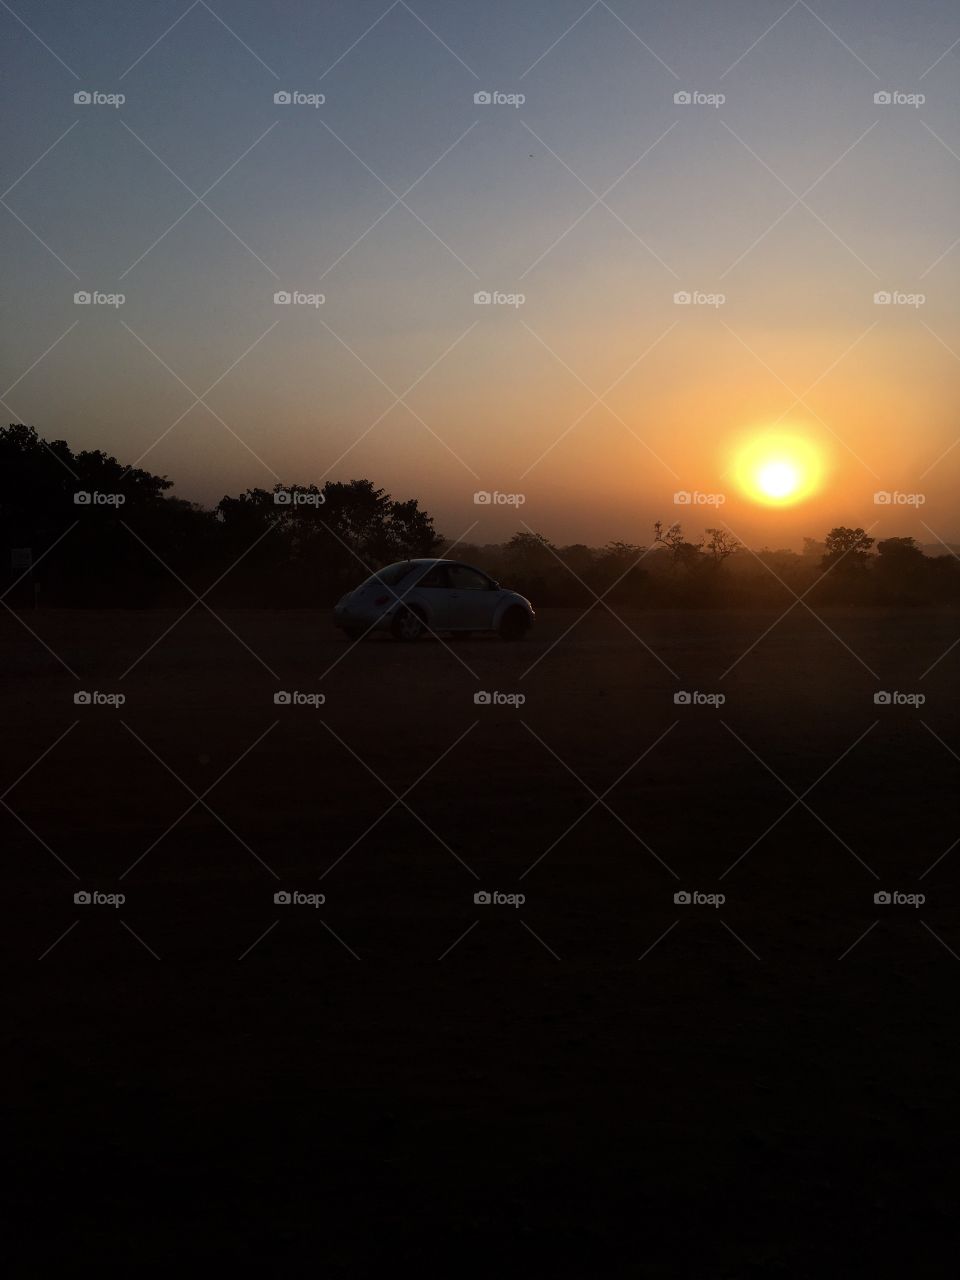 Sunset in Abuja, Nigeria 